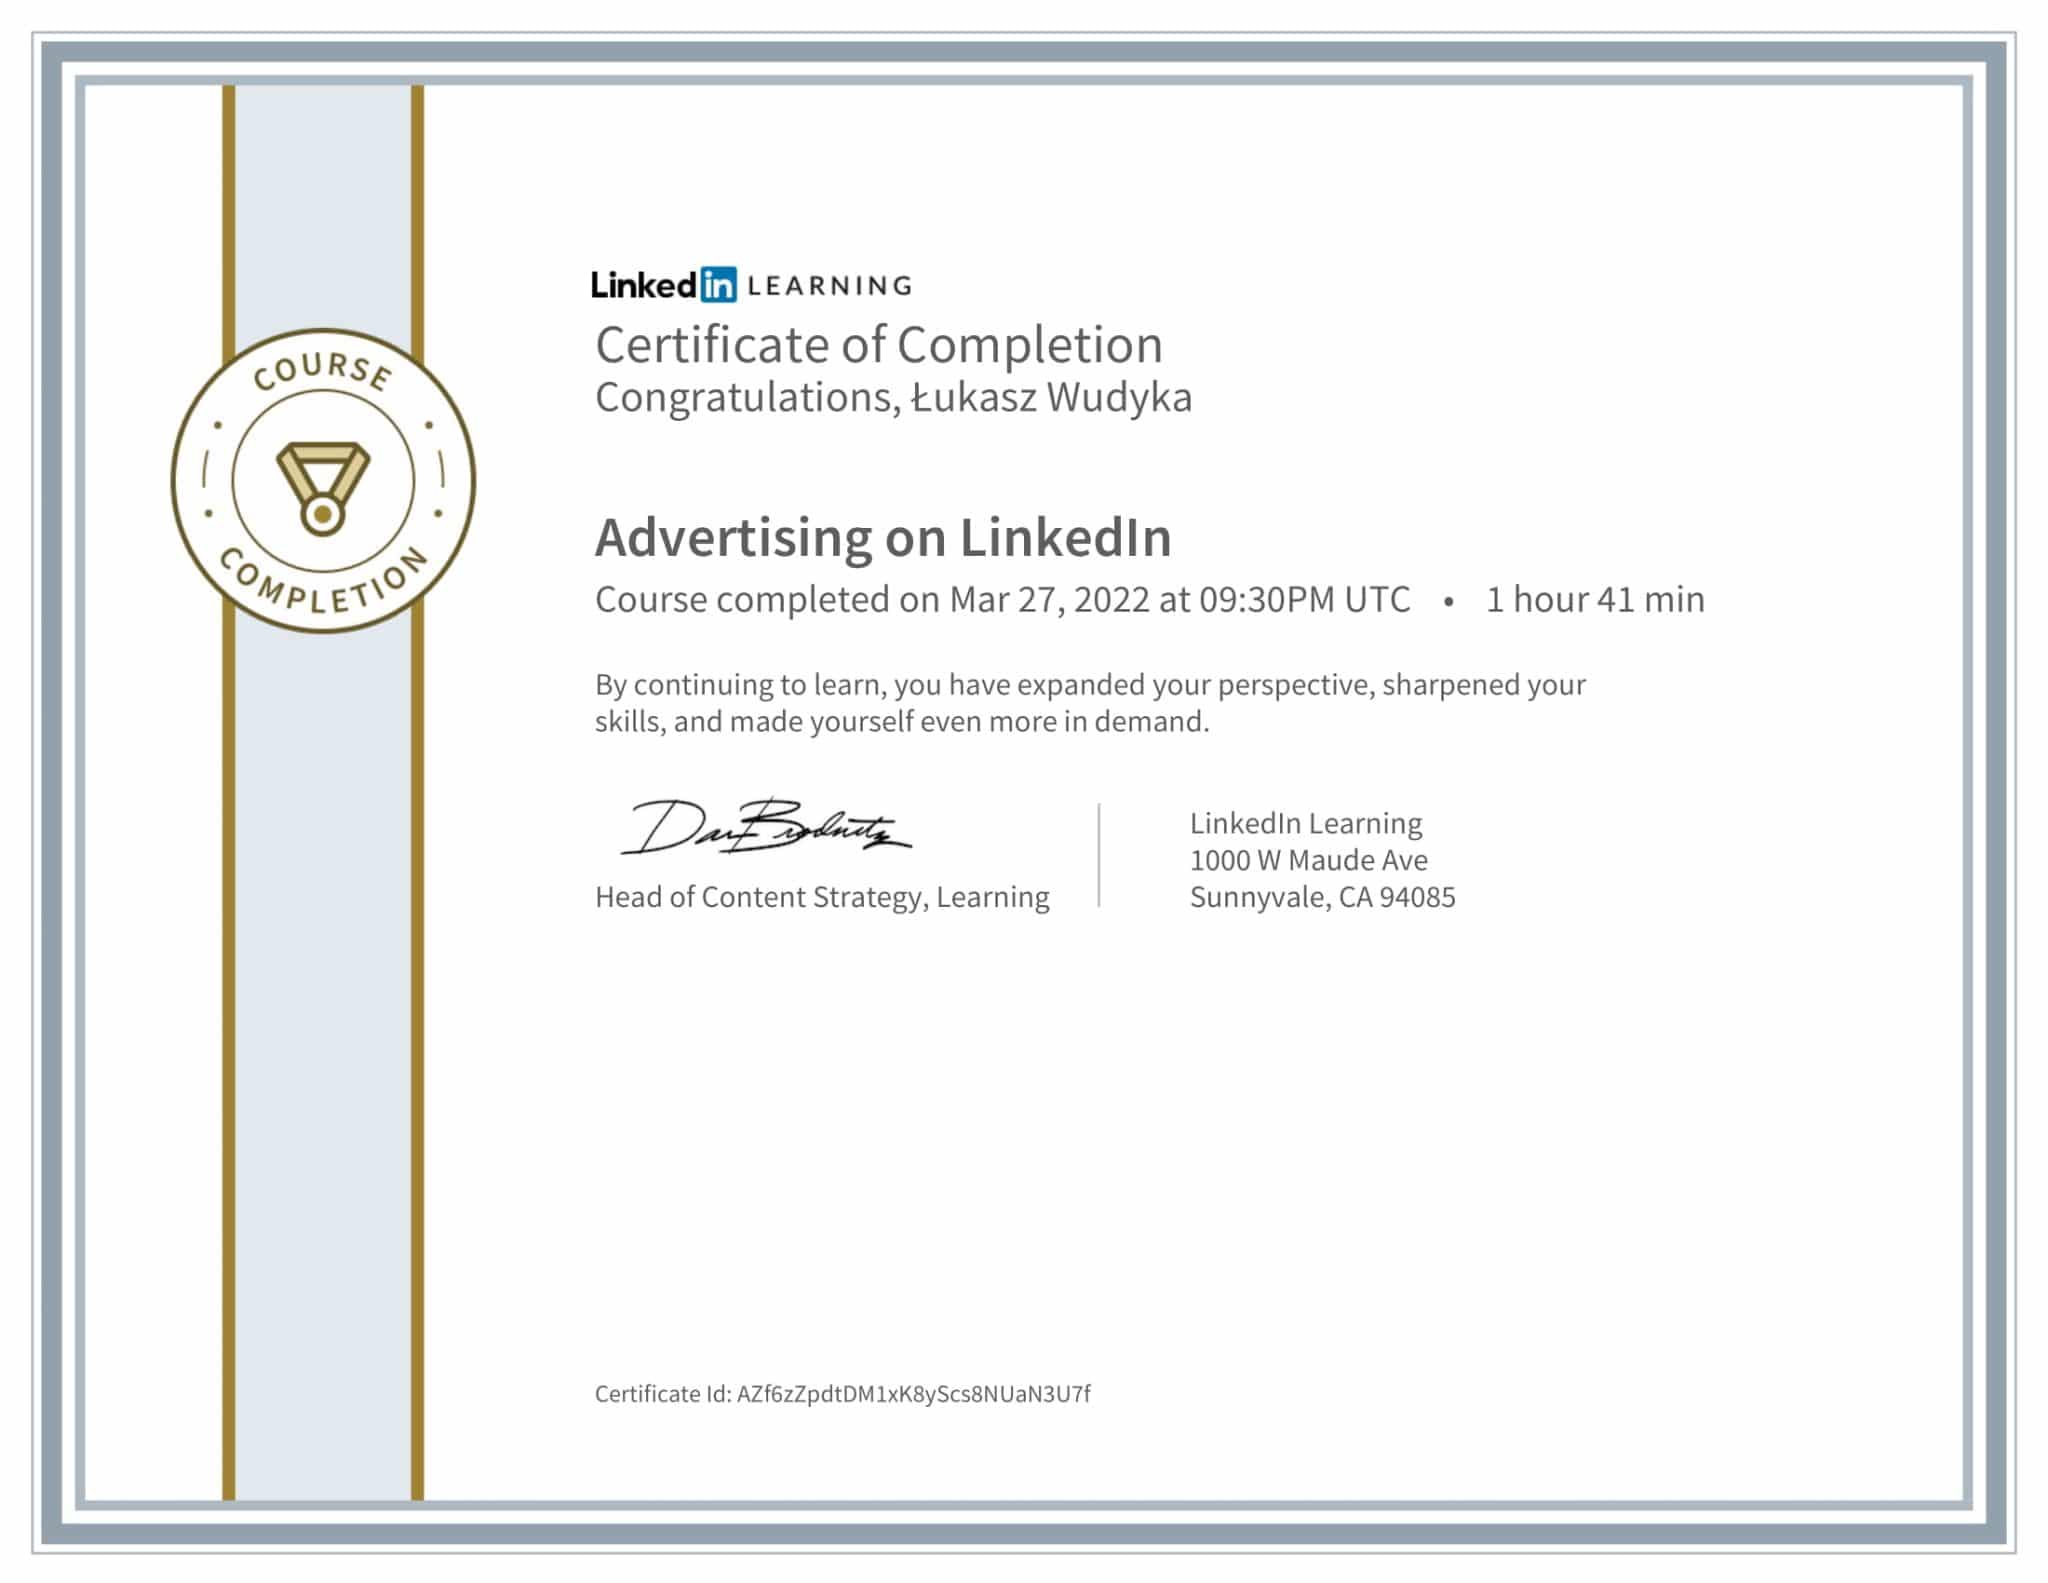 CertificateOfCompletion_Advertising on LinkedIn-1